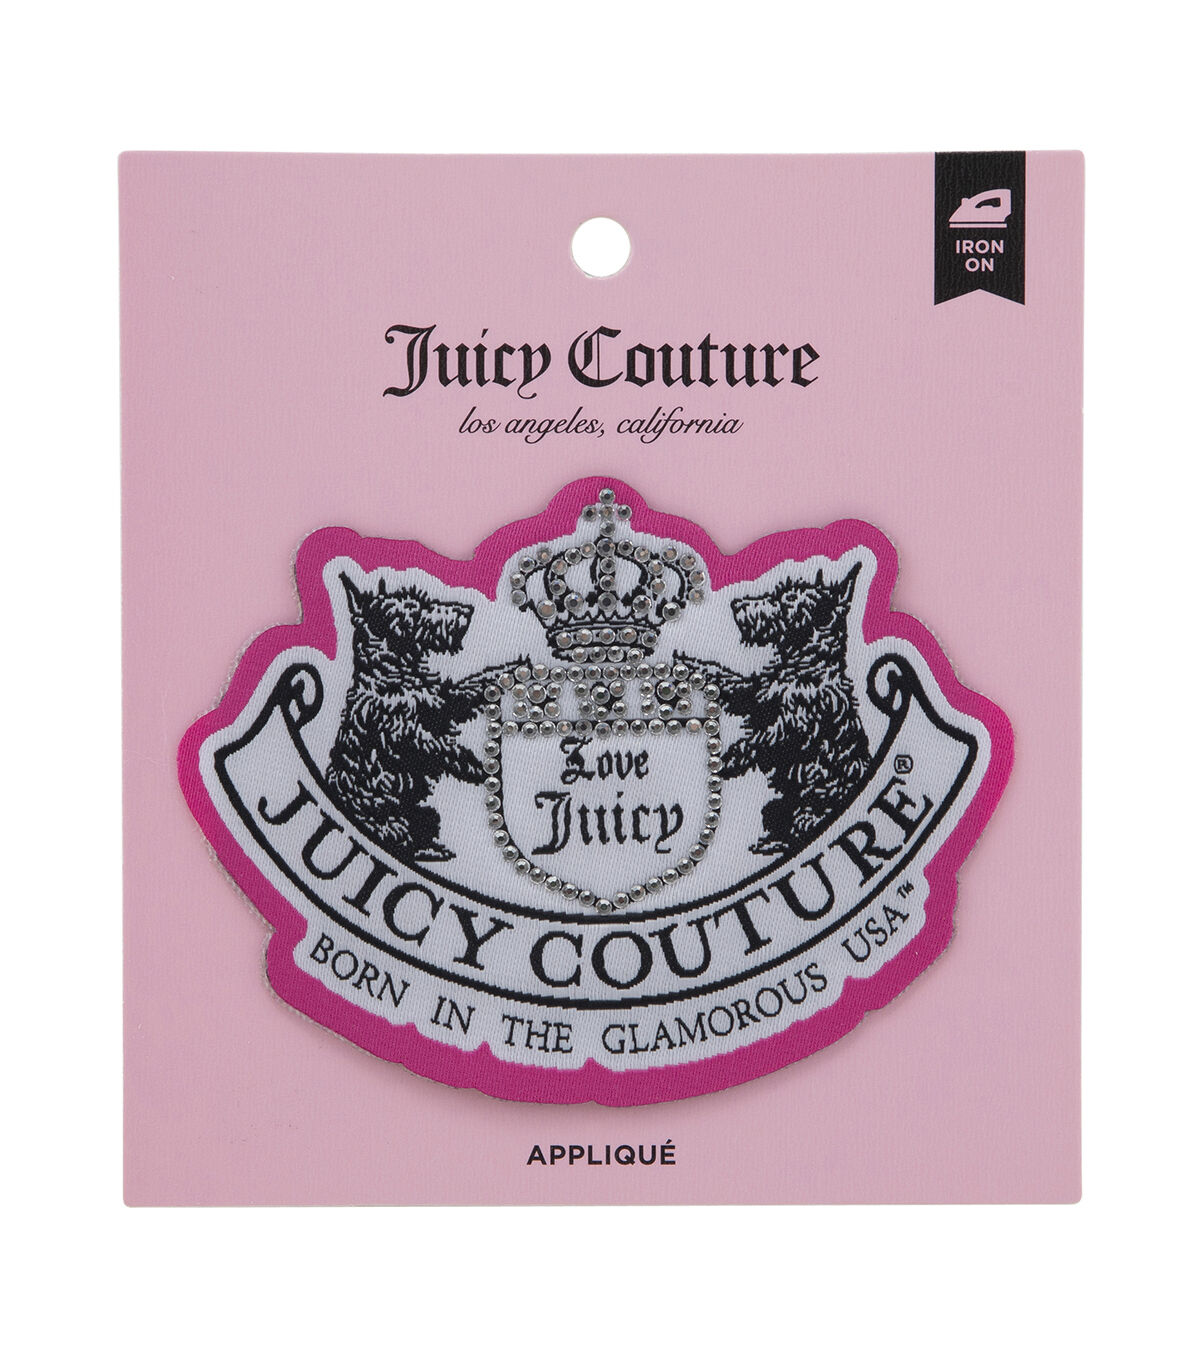 Juicy Couture Handbag Cake - Decorated Cake by - CakesDecor